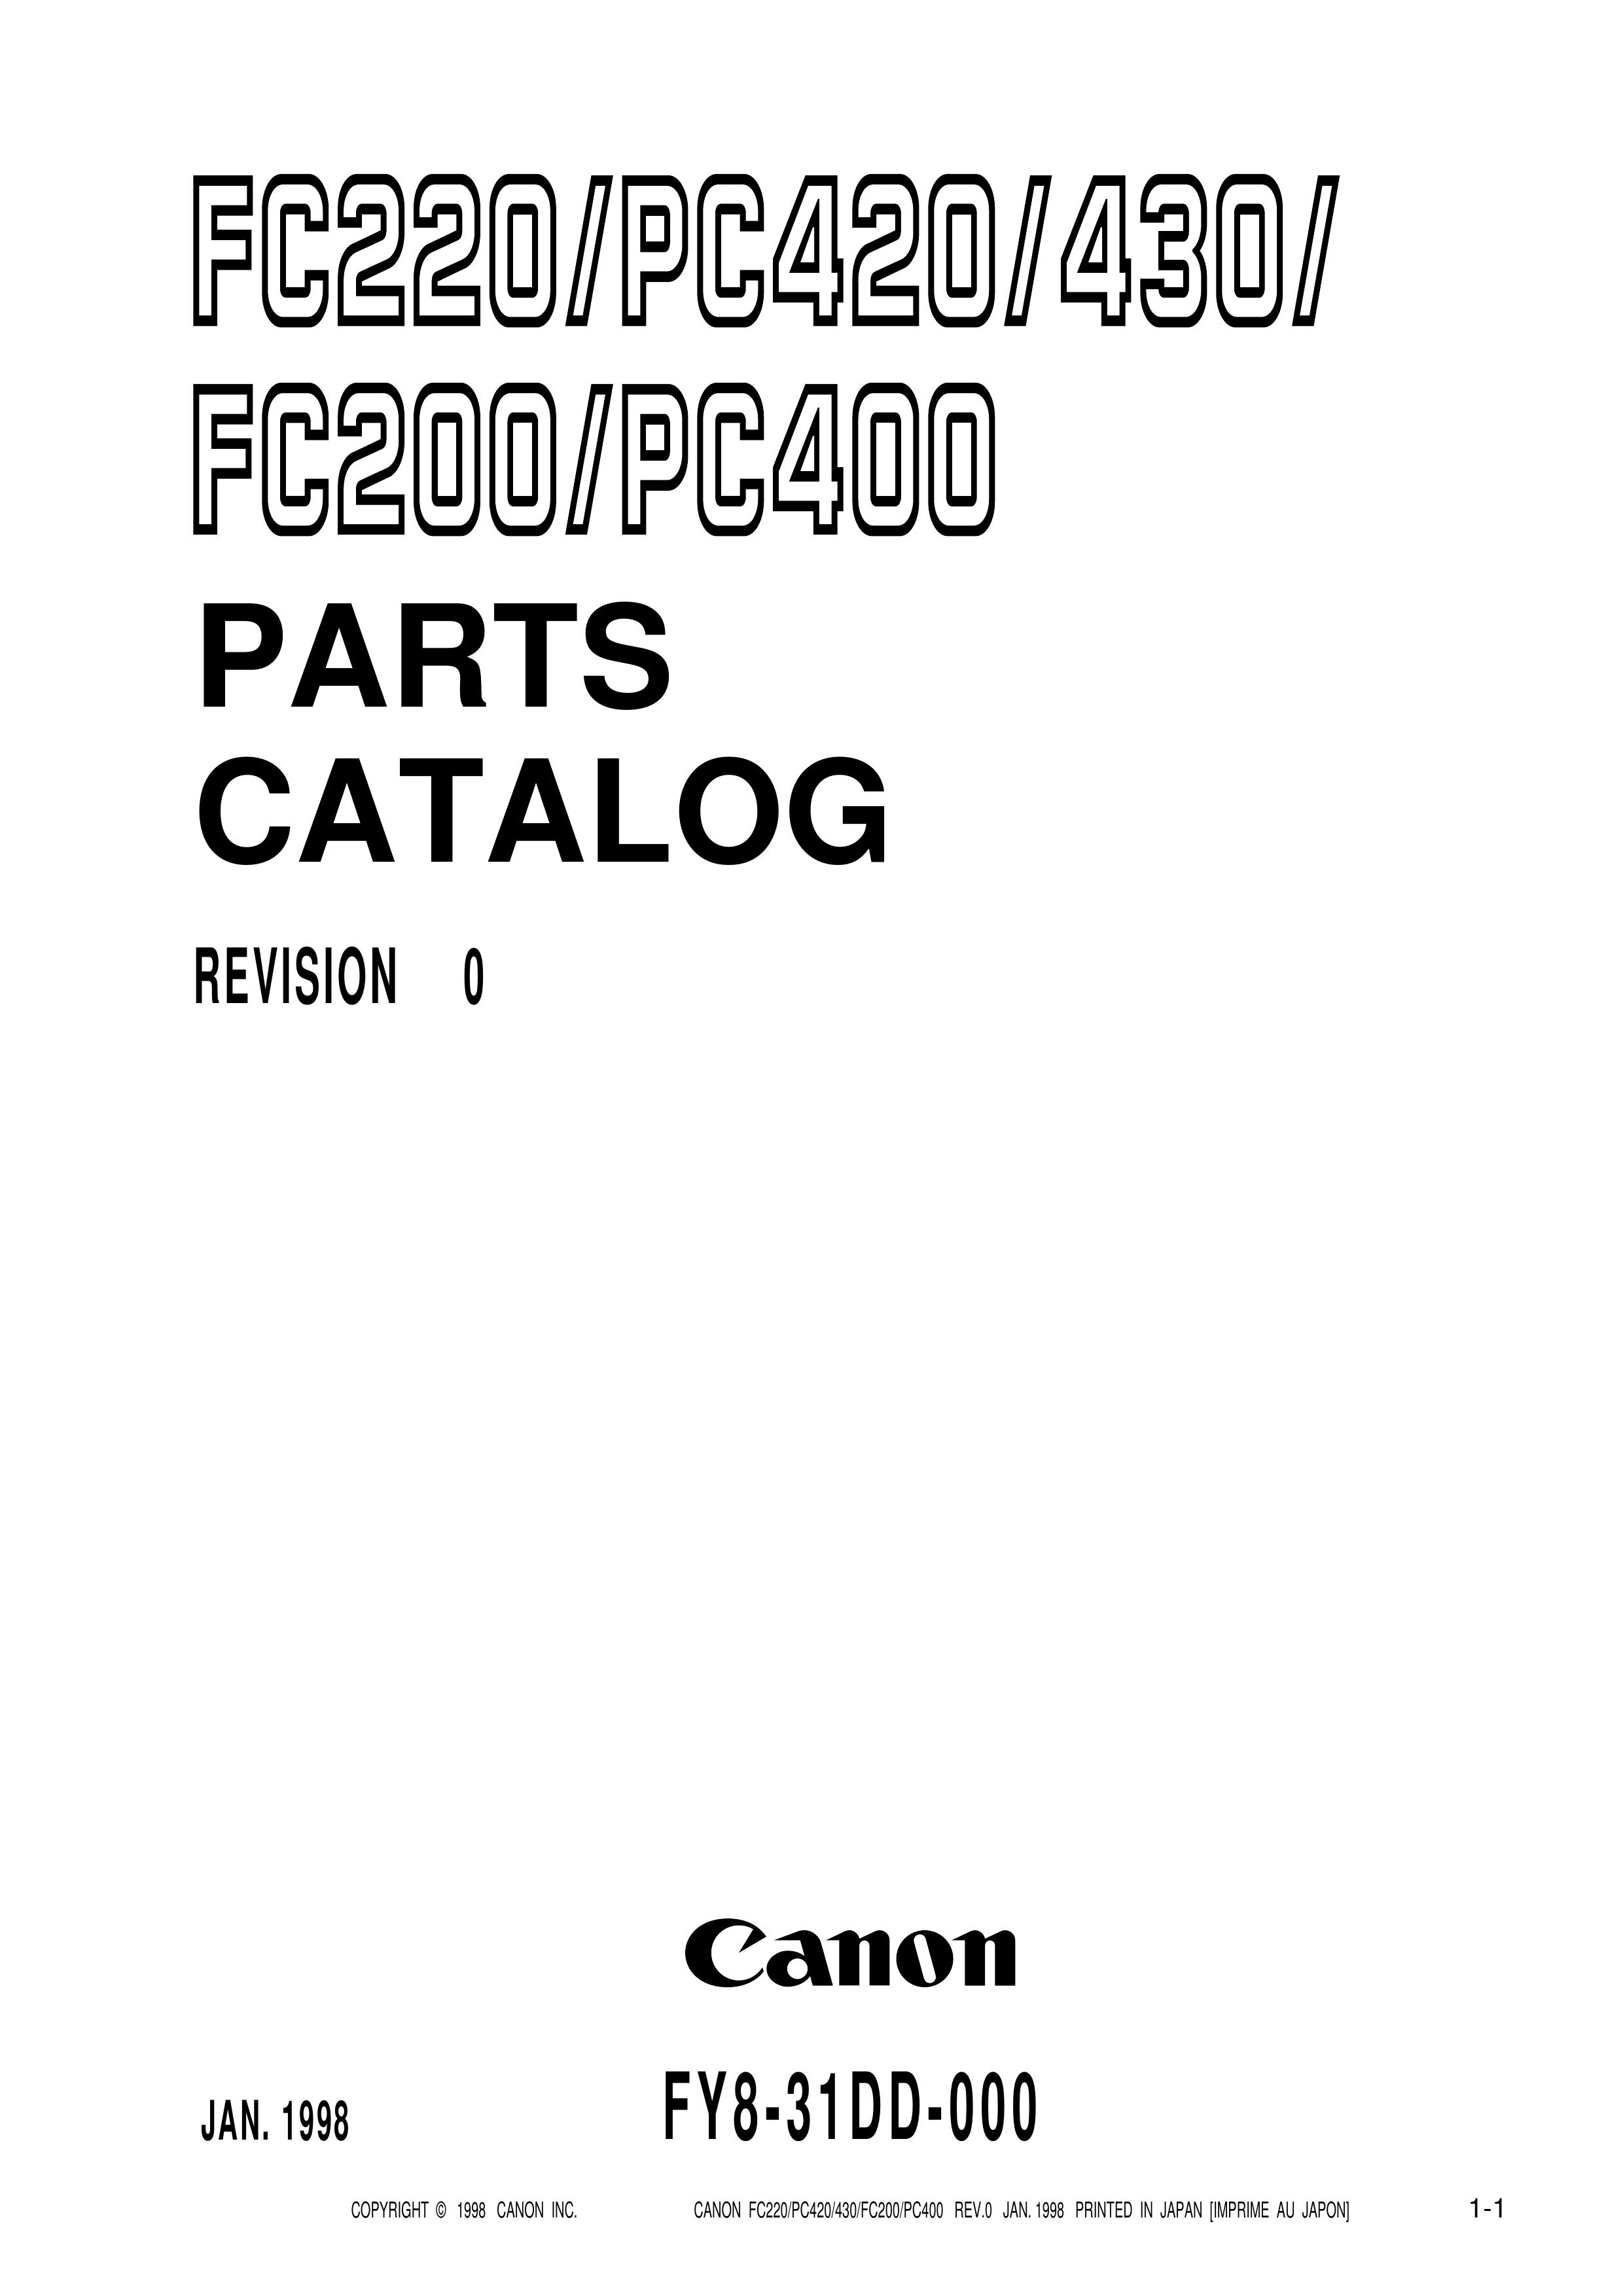 Canon 430 Outboard Motor User Manual